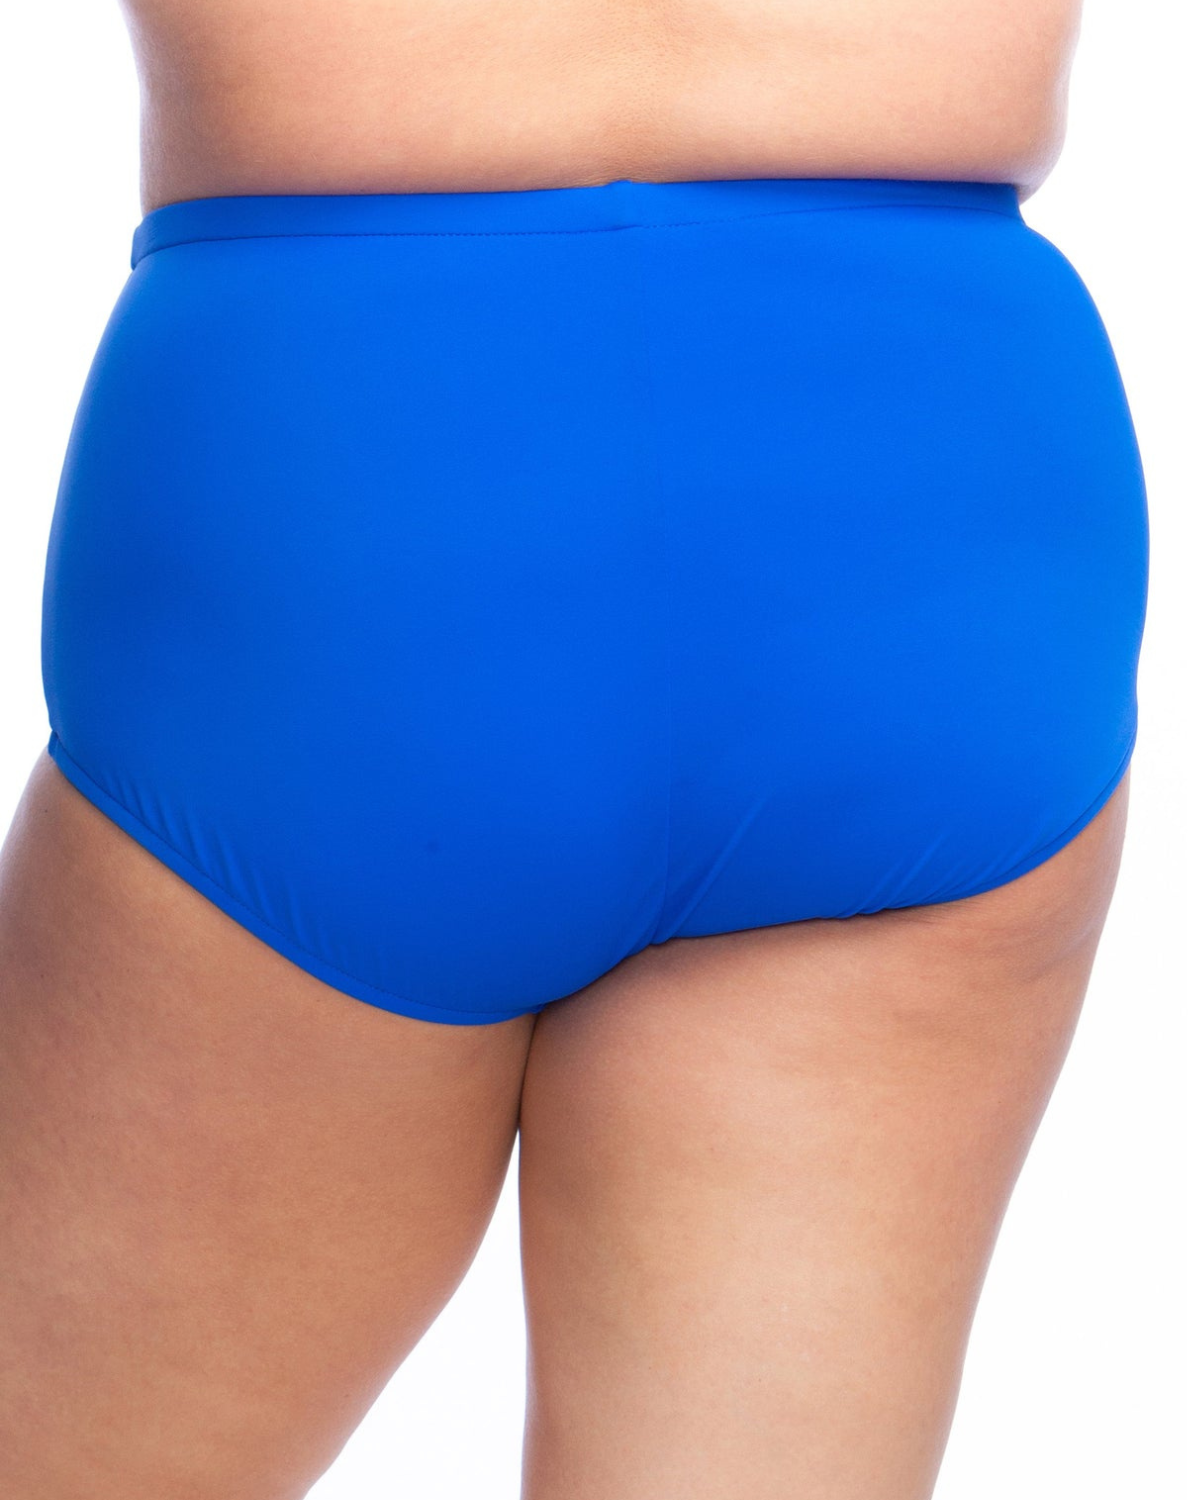 Plus size model wearing a full pant bikini brief in cobalt